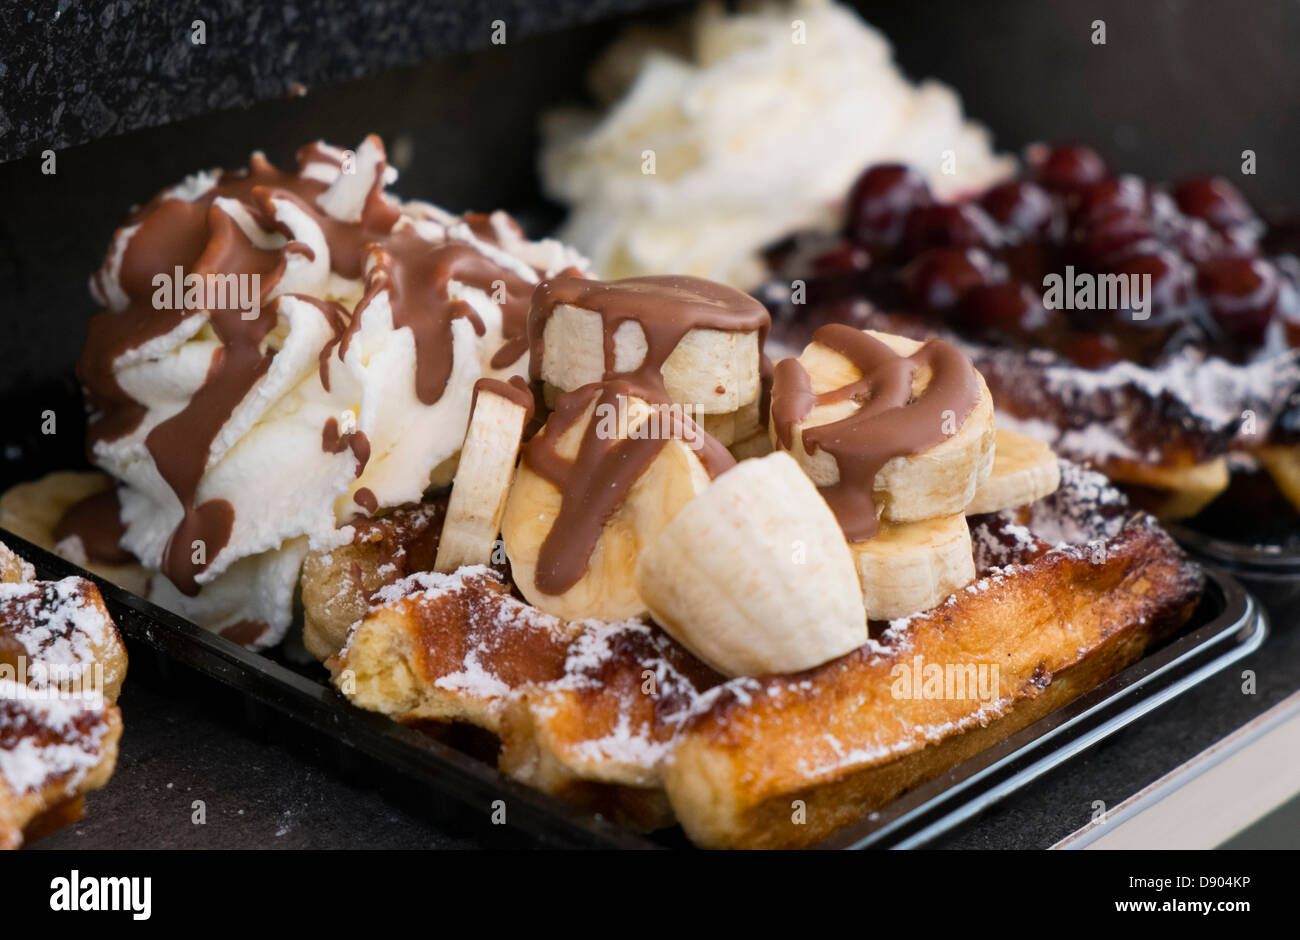 Netherlands, Volendam, waffle with bananas, chocolate and whipped cream Stock Photo